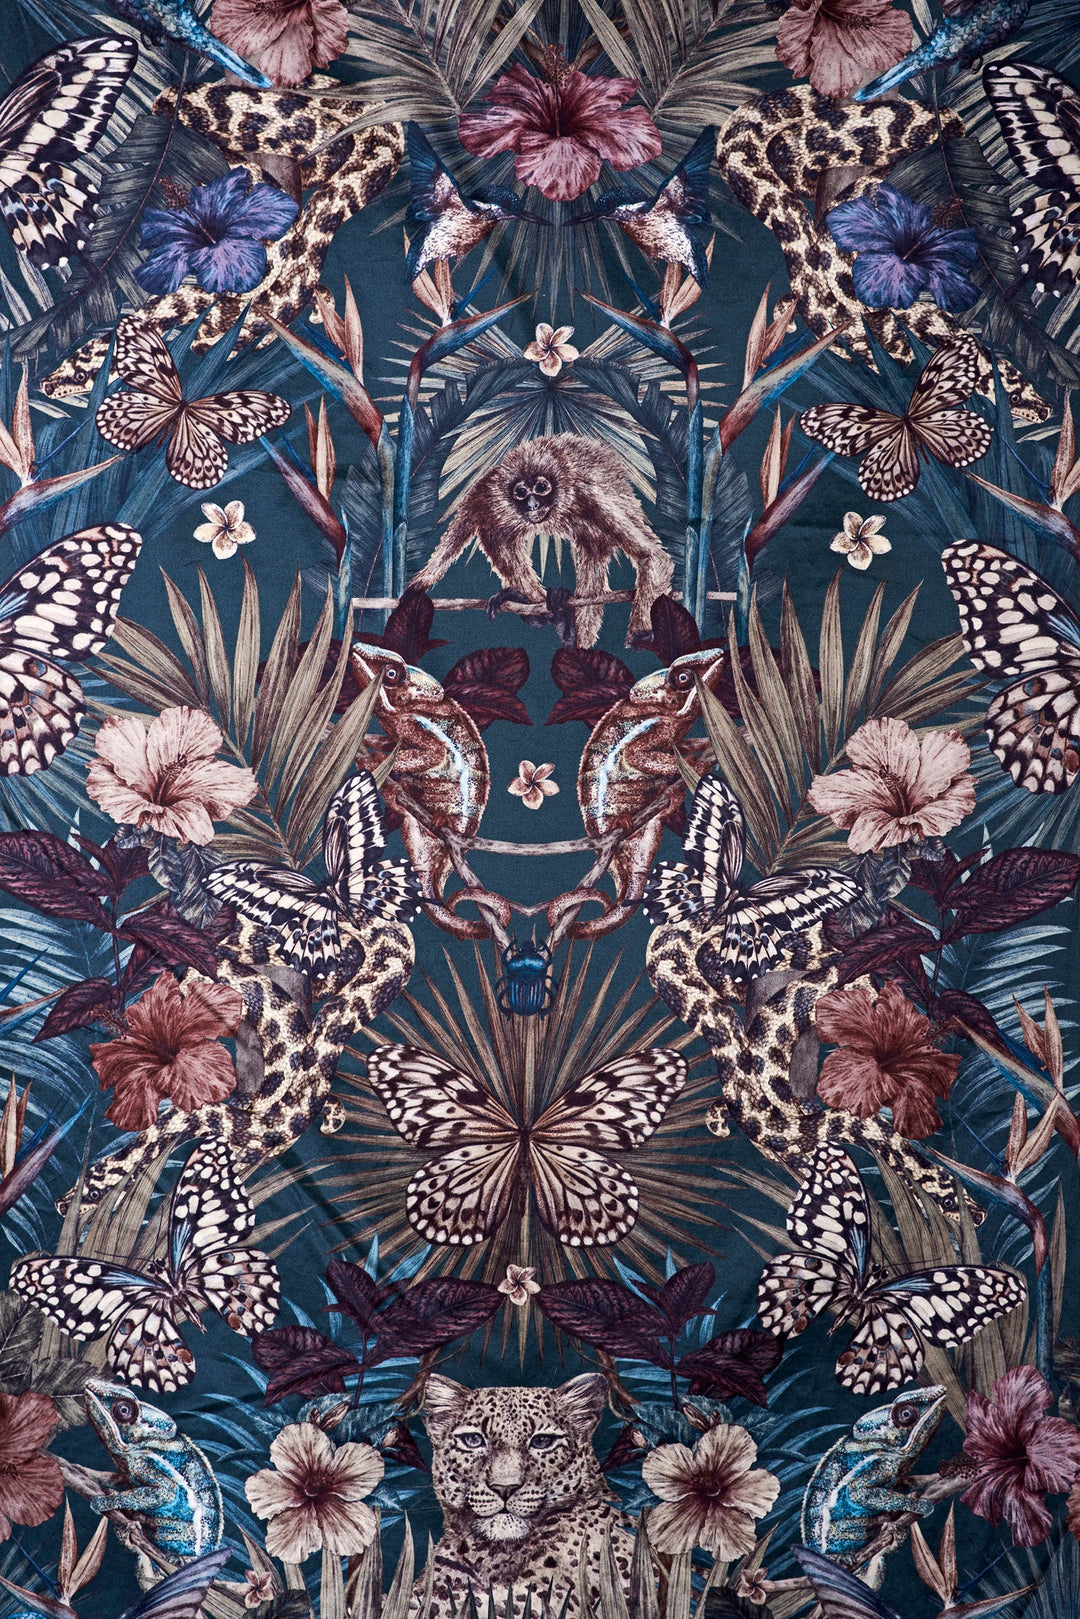 Victoria-sanders-designs-exotica-fabric-dusky-petrol-jungle-print-smooth-velvet-butterflies-tigers-exotic-plants-hand-drawn-pattern